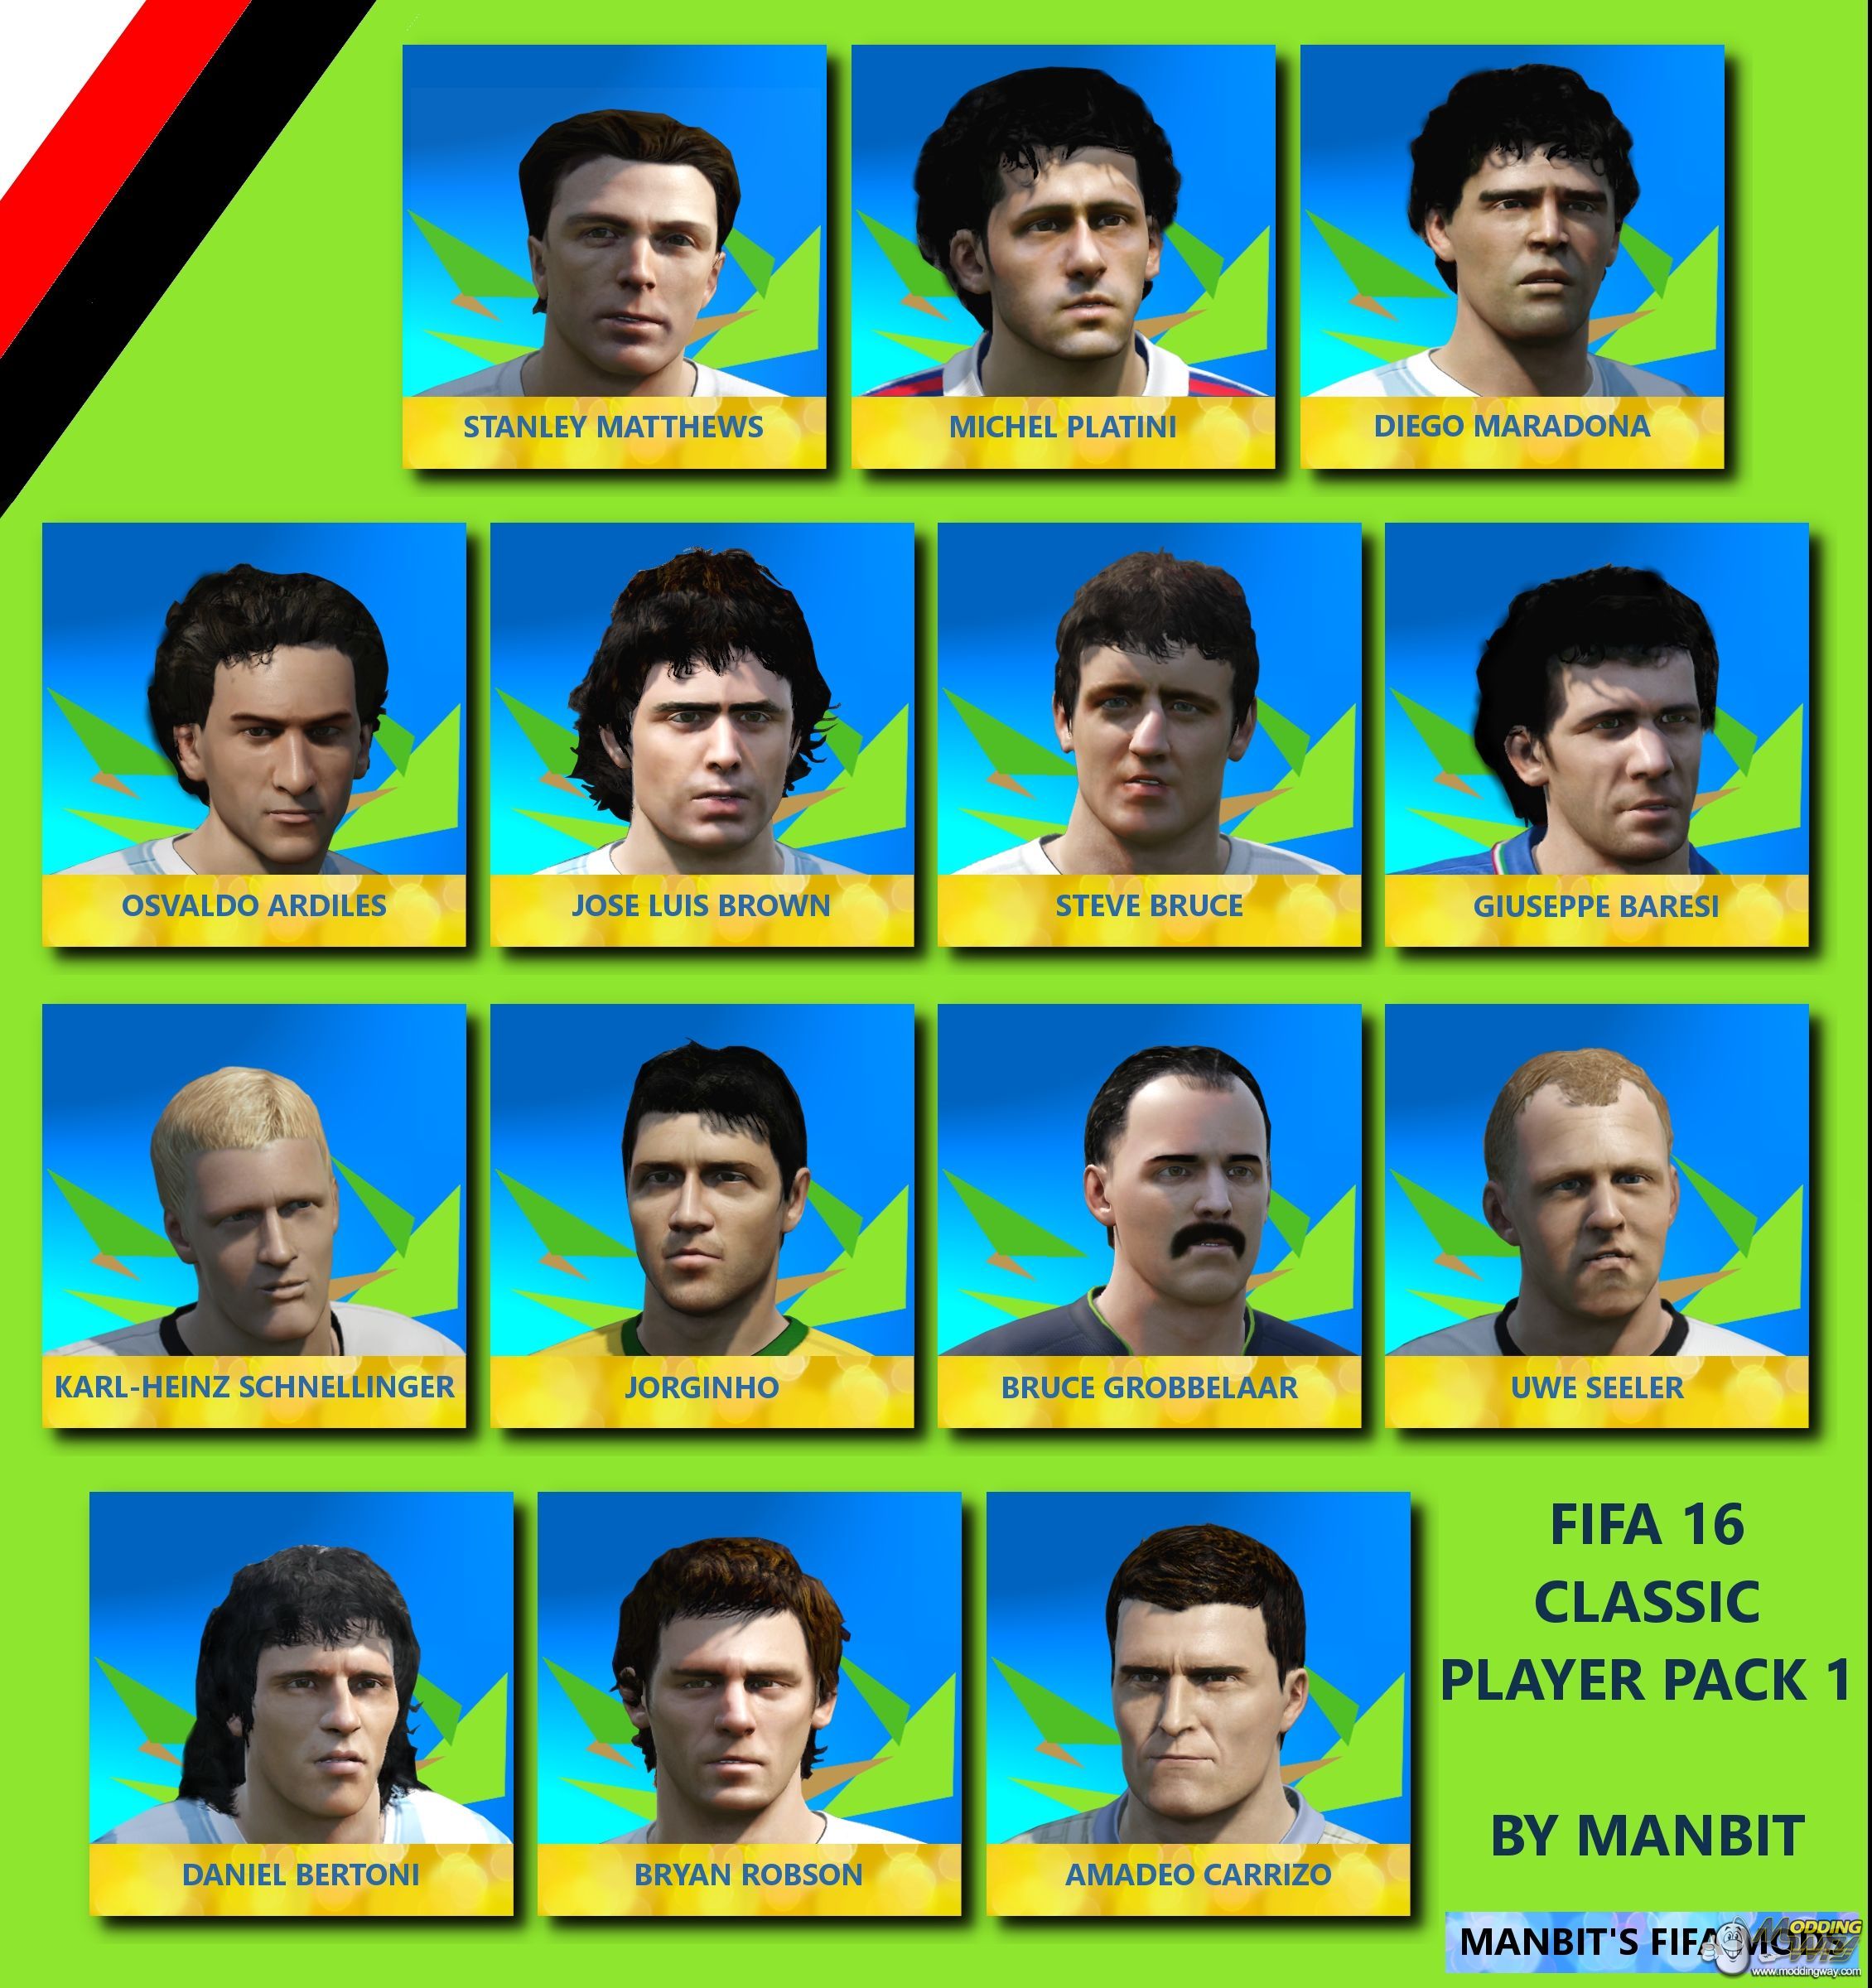 Fifa classic. Марадона ФИФА 15. FIFA 16. ФИФА 12 классические игроки. Легендарные игроки в ФИФА 15.